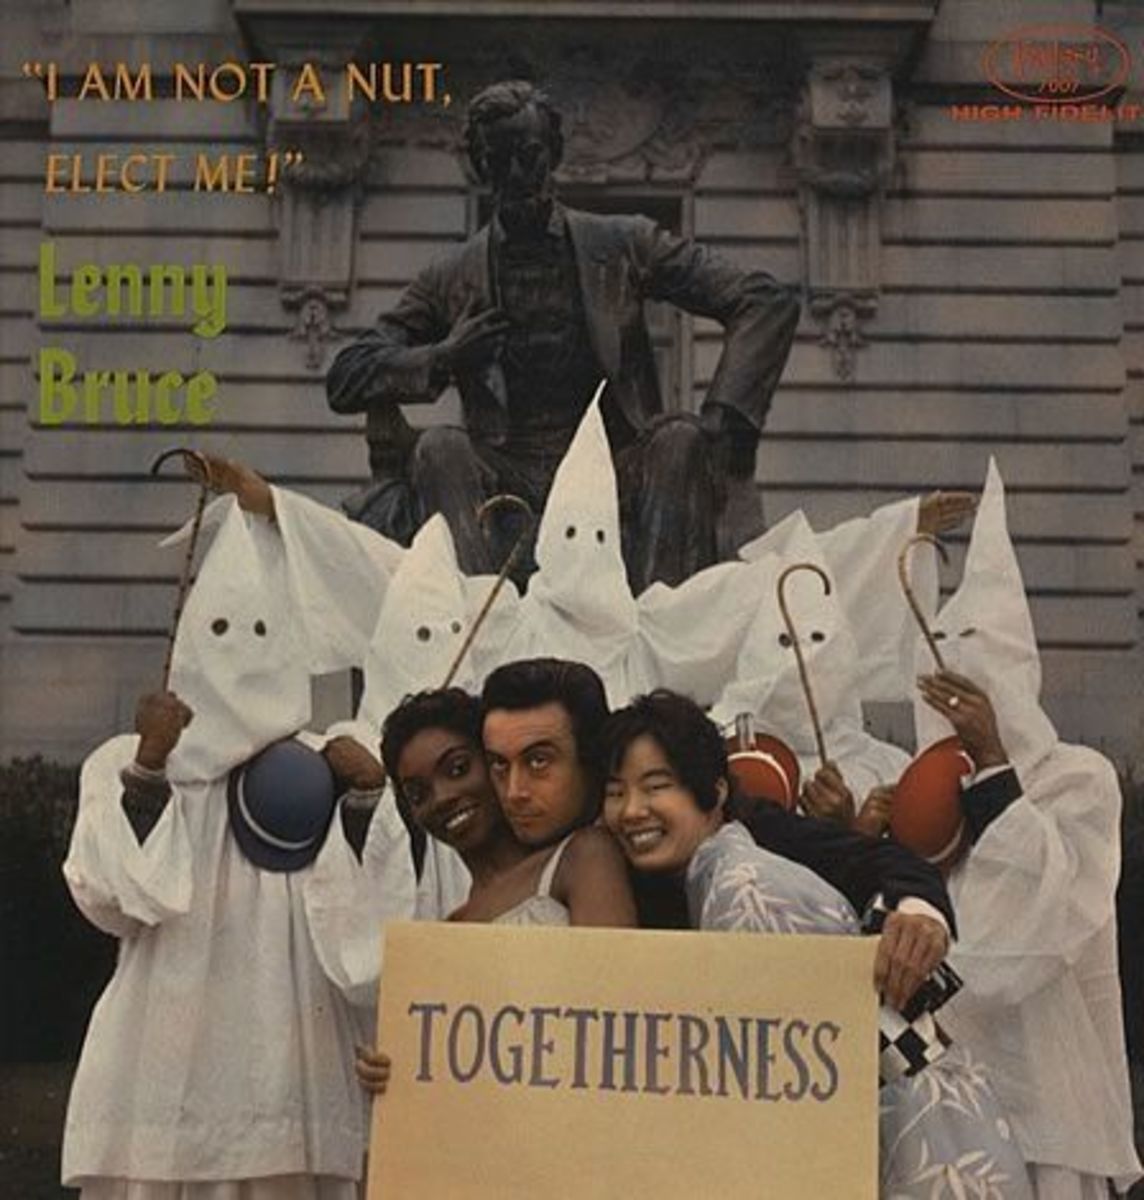 Lenny Bruce "I am Not a Nut, Elect Me! Togetherness" Fantasy Records 7007 12" LP Vinyl Record , US Pressing (1959)